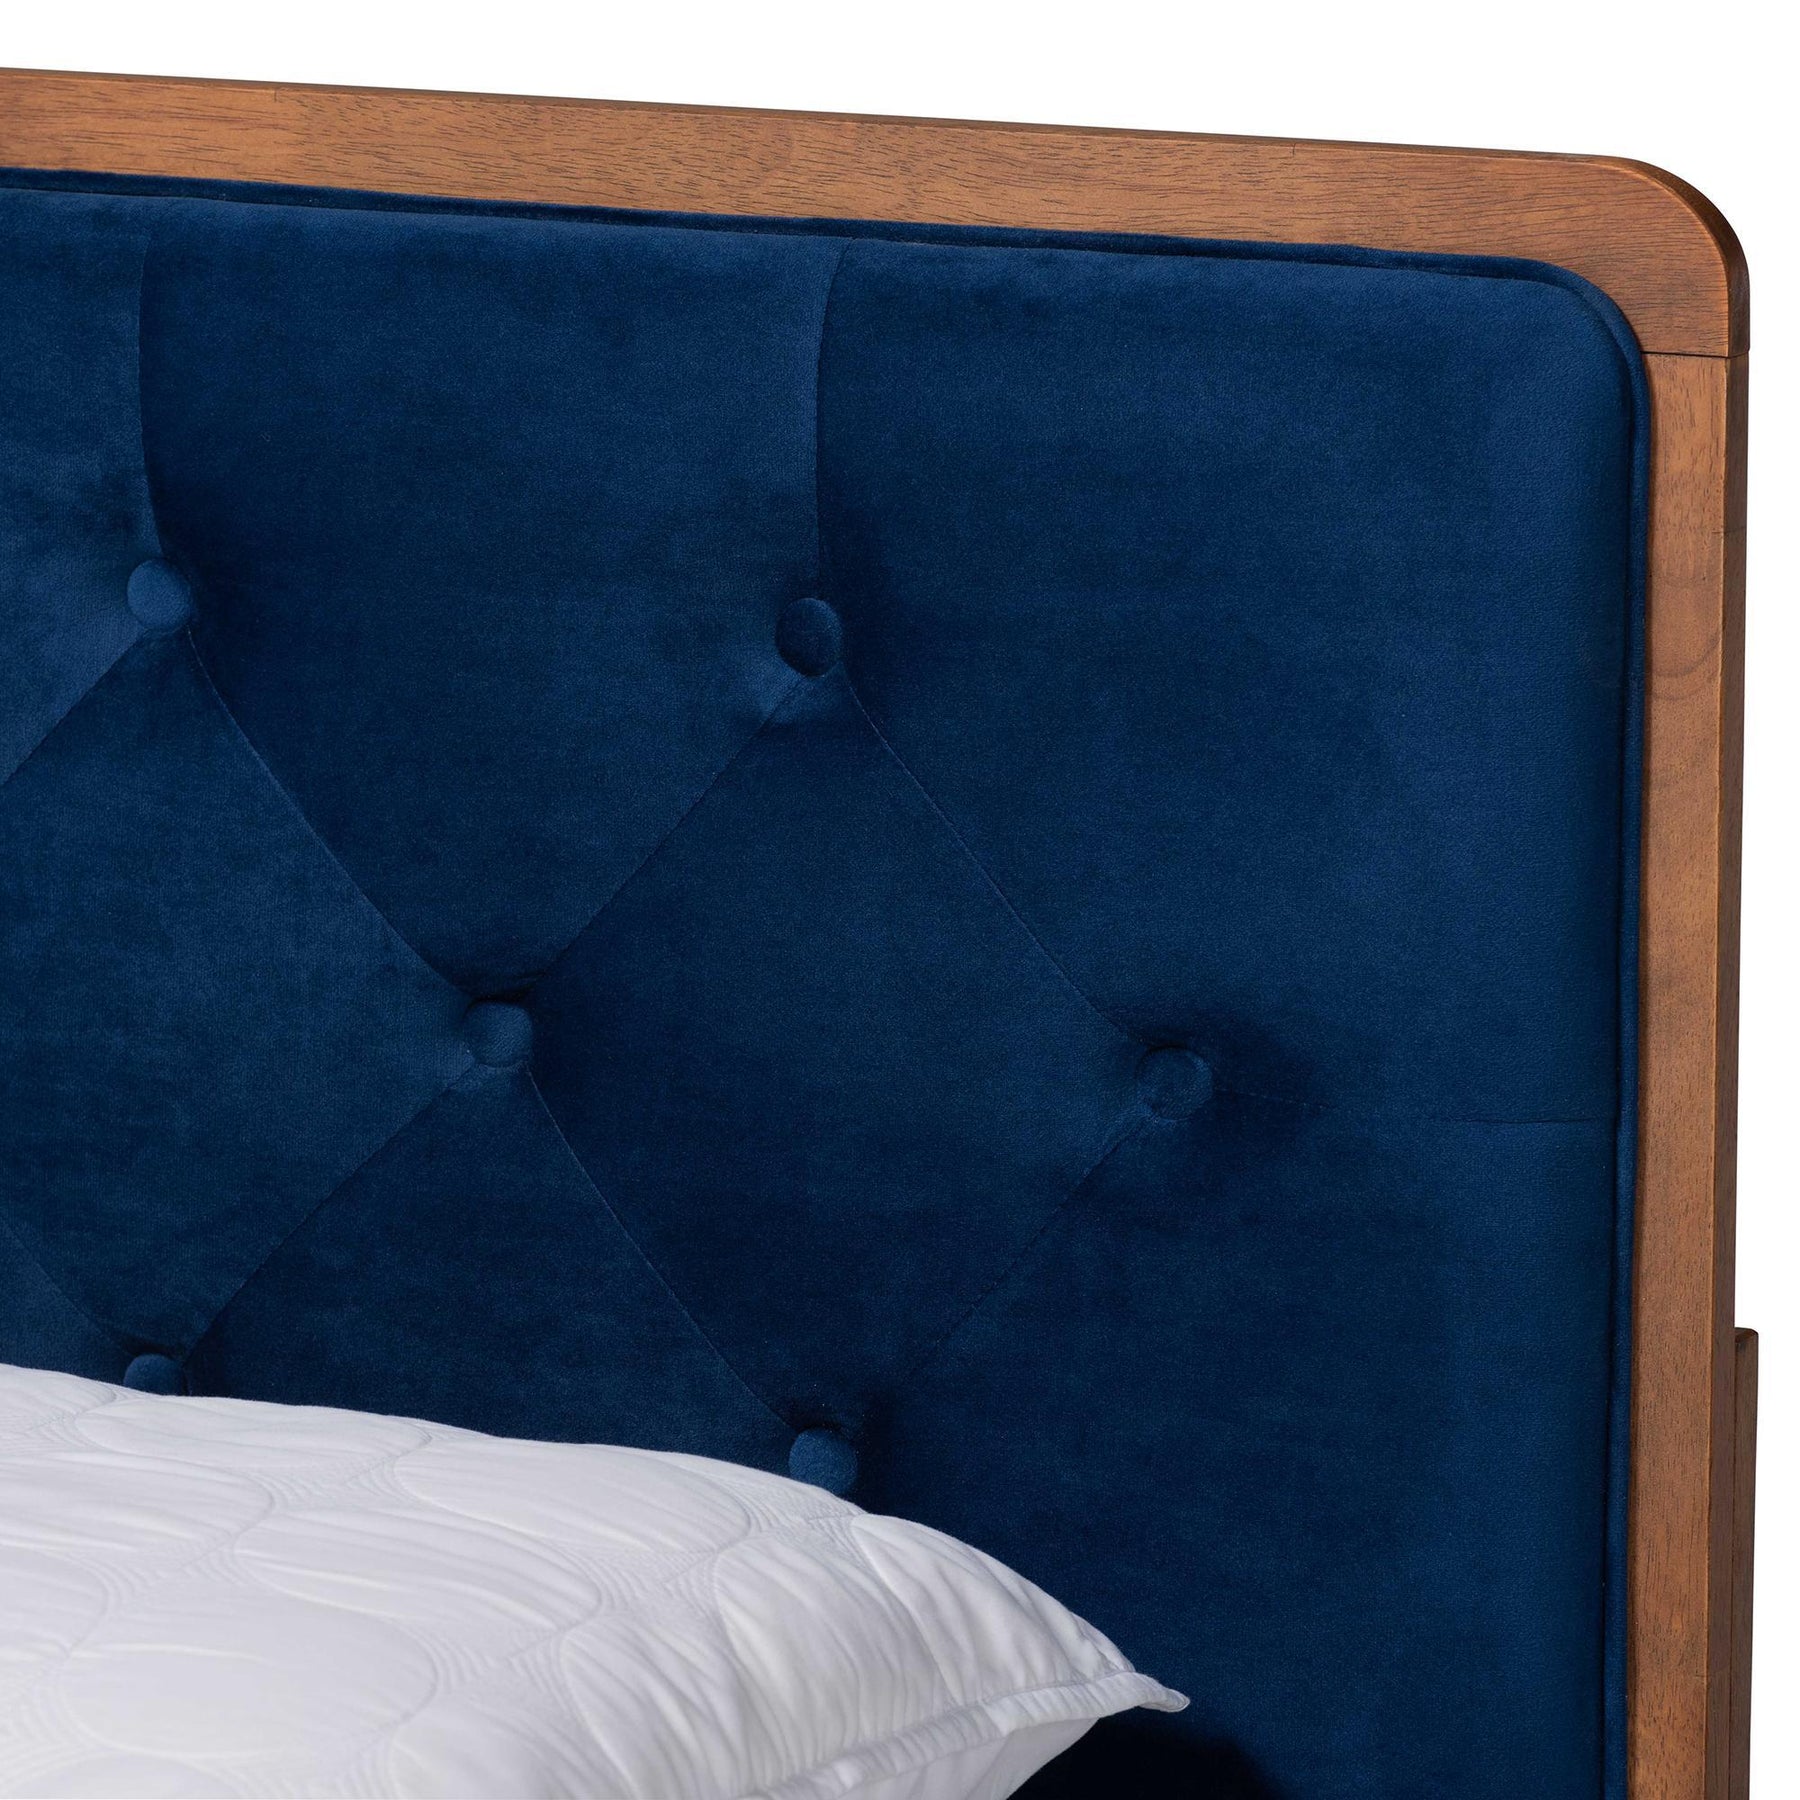 Baxton Studio Larue Modern And Contemporary Navy Blue Velvet Fabric Upholstered And Walnut Brown Finished Wood King Size Platform Bed - MG0020-1S-Navy Velvet/Walnut-King